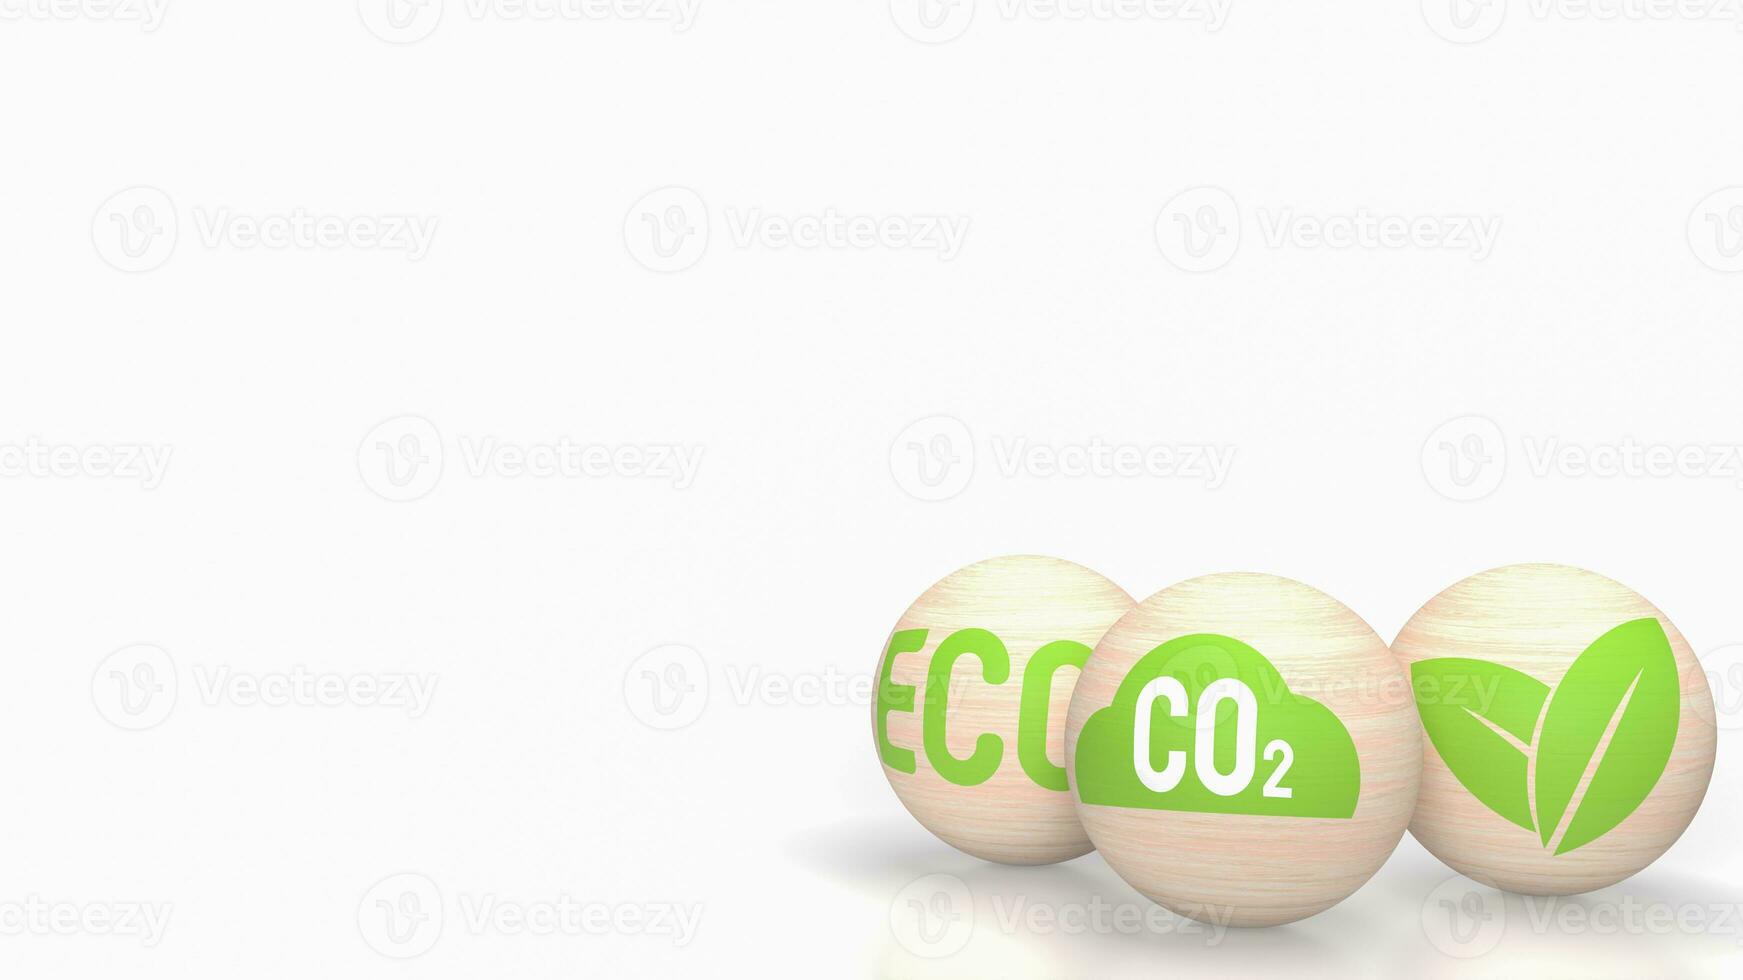 el co2 icono en madera pelota para eco o ecología concepto 3d representación foto